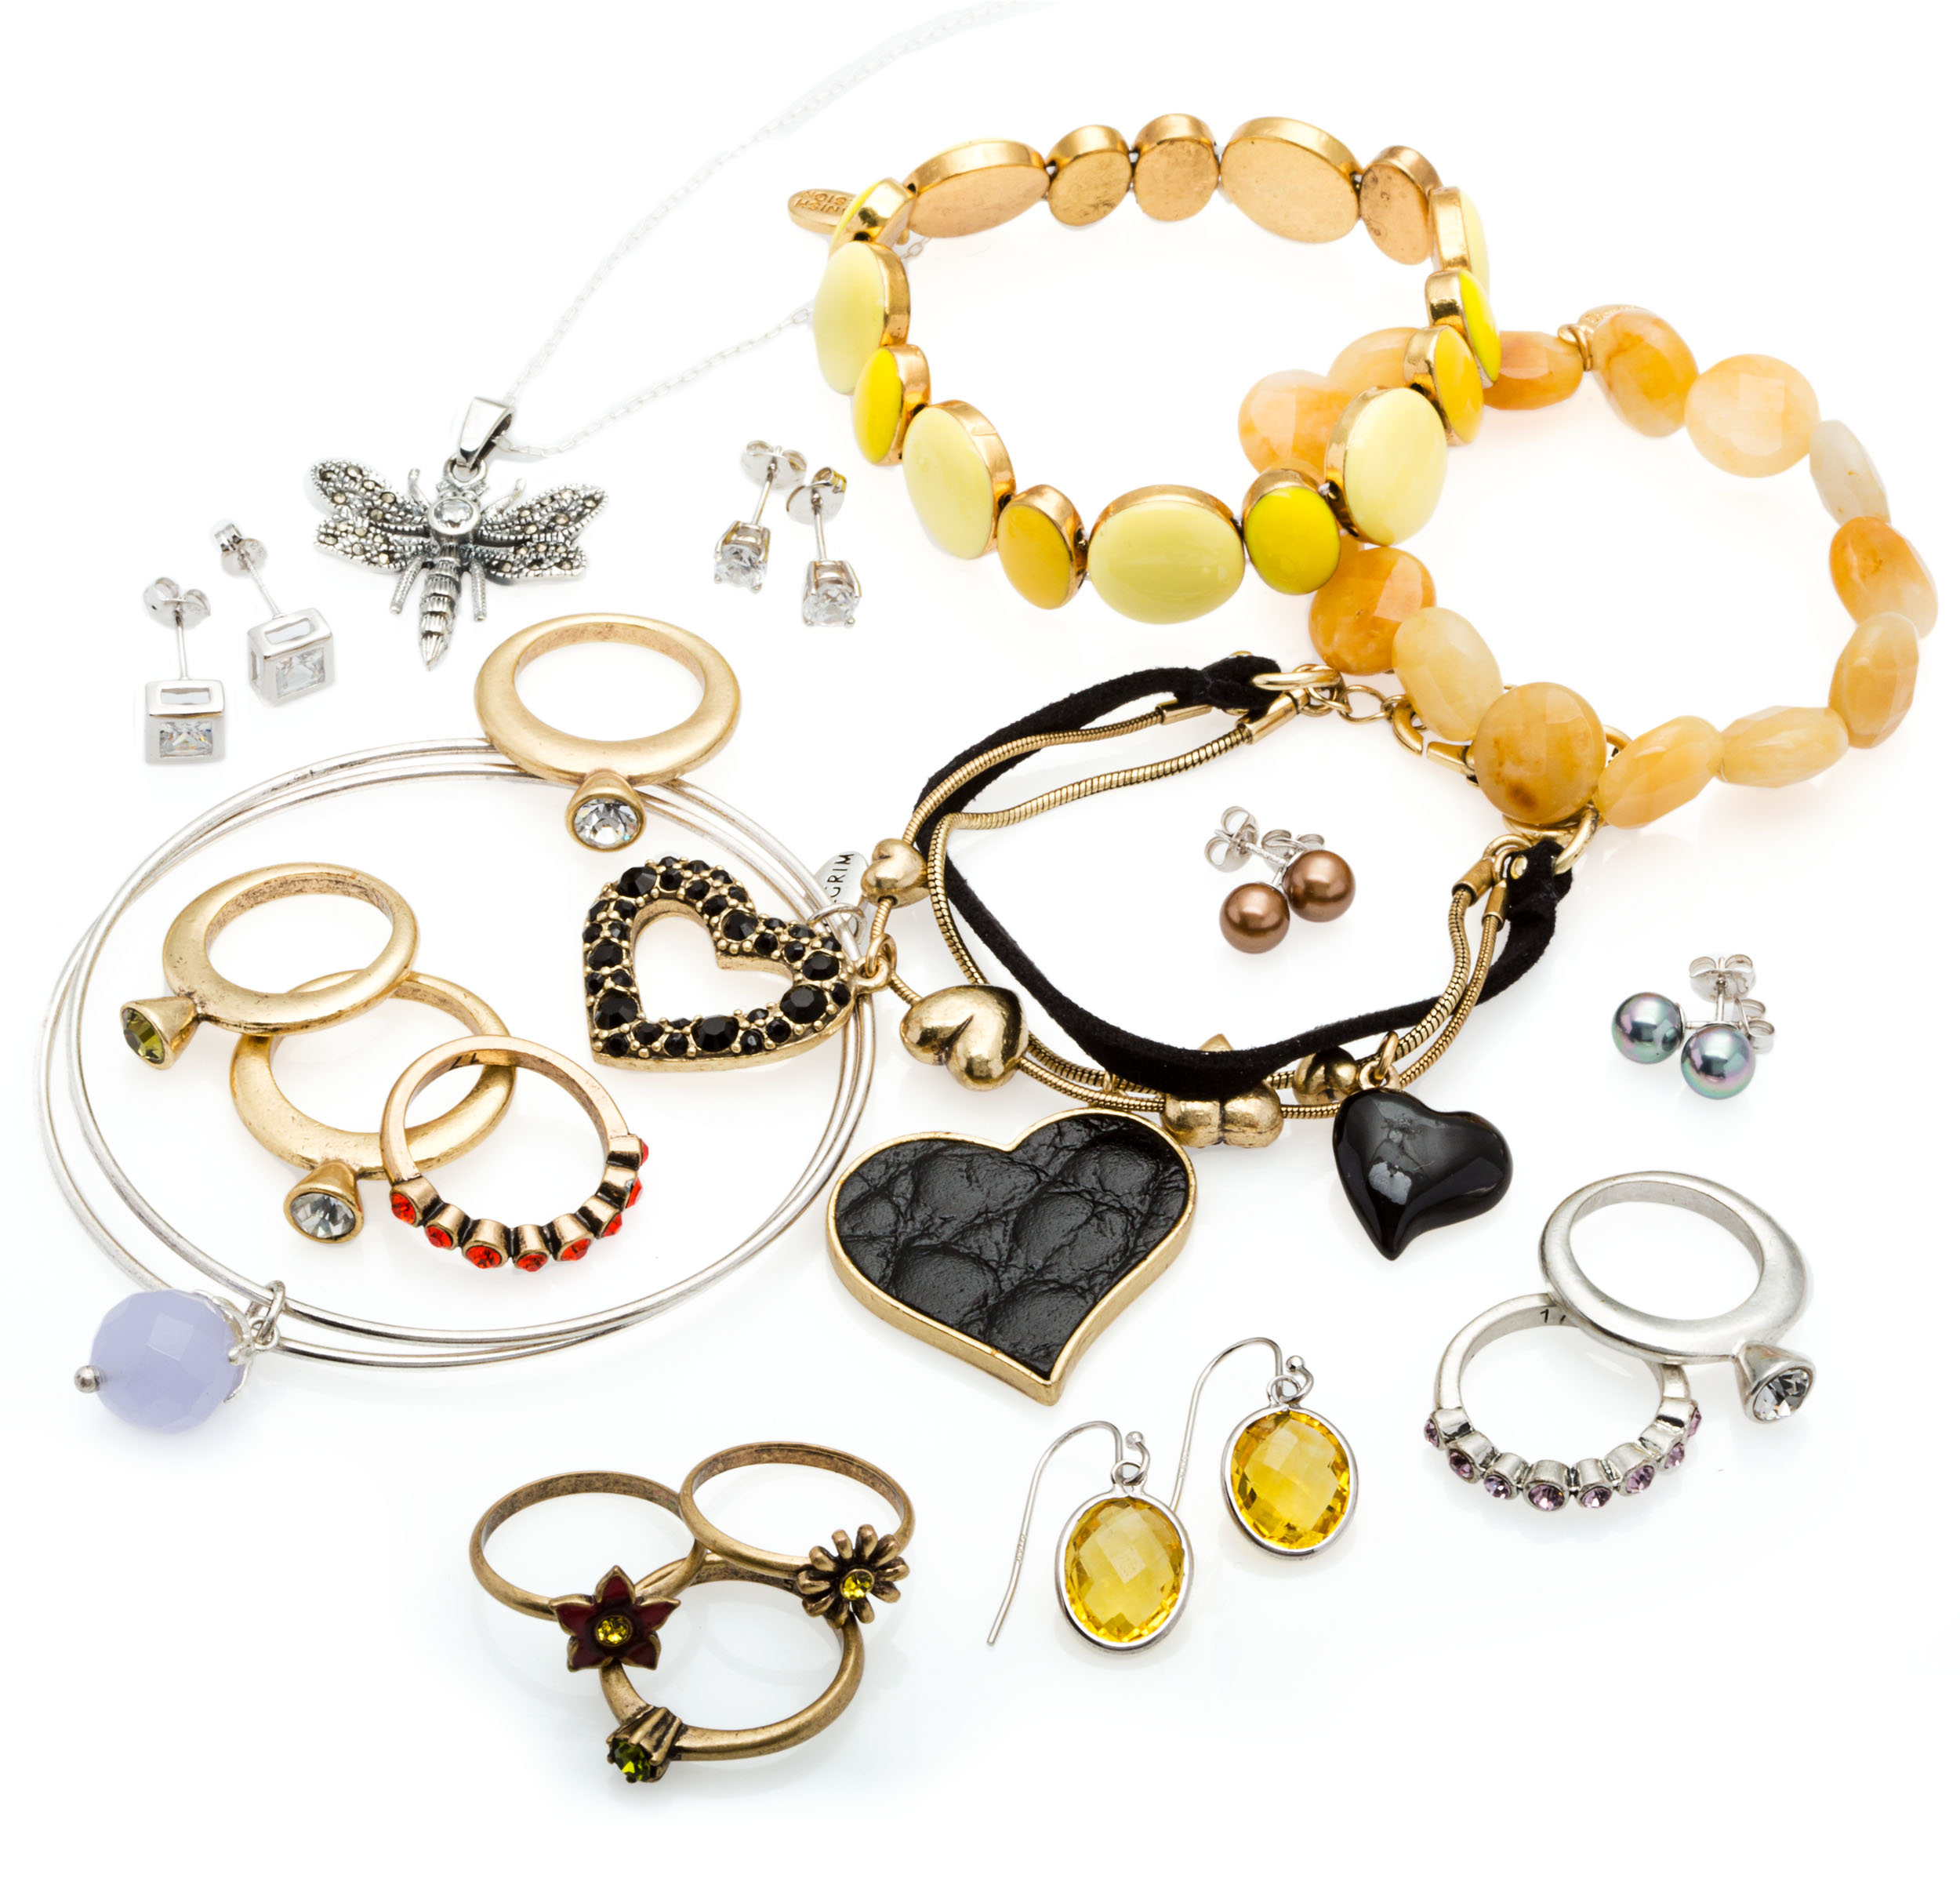 Overstock.com's Million Dollar Jewelry Lot